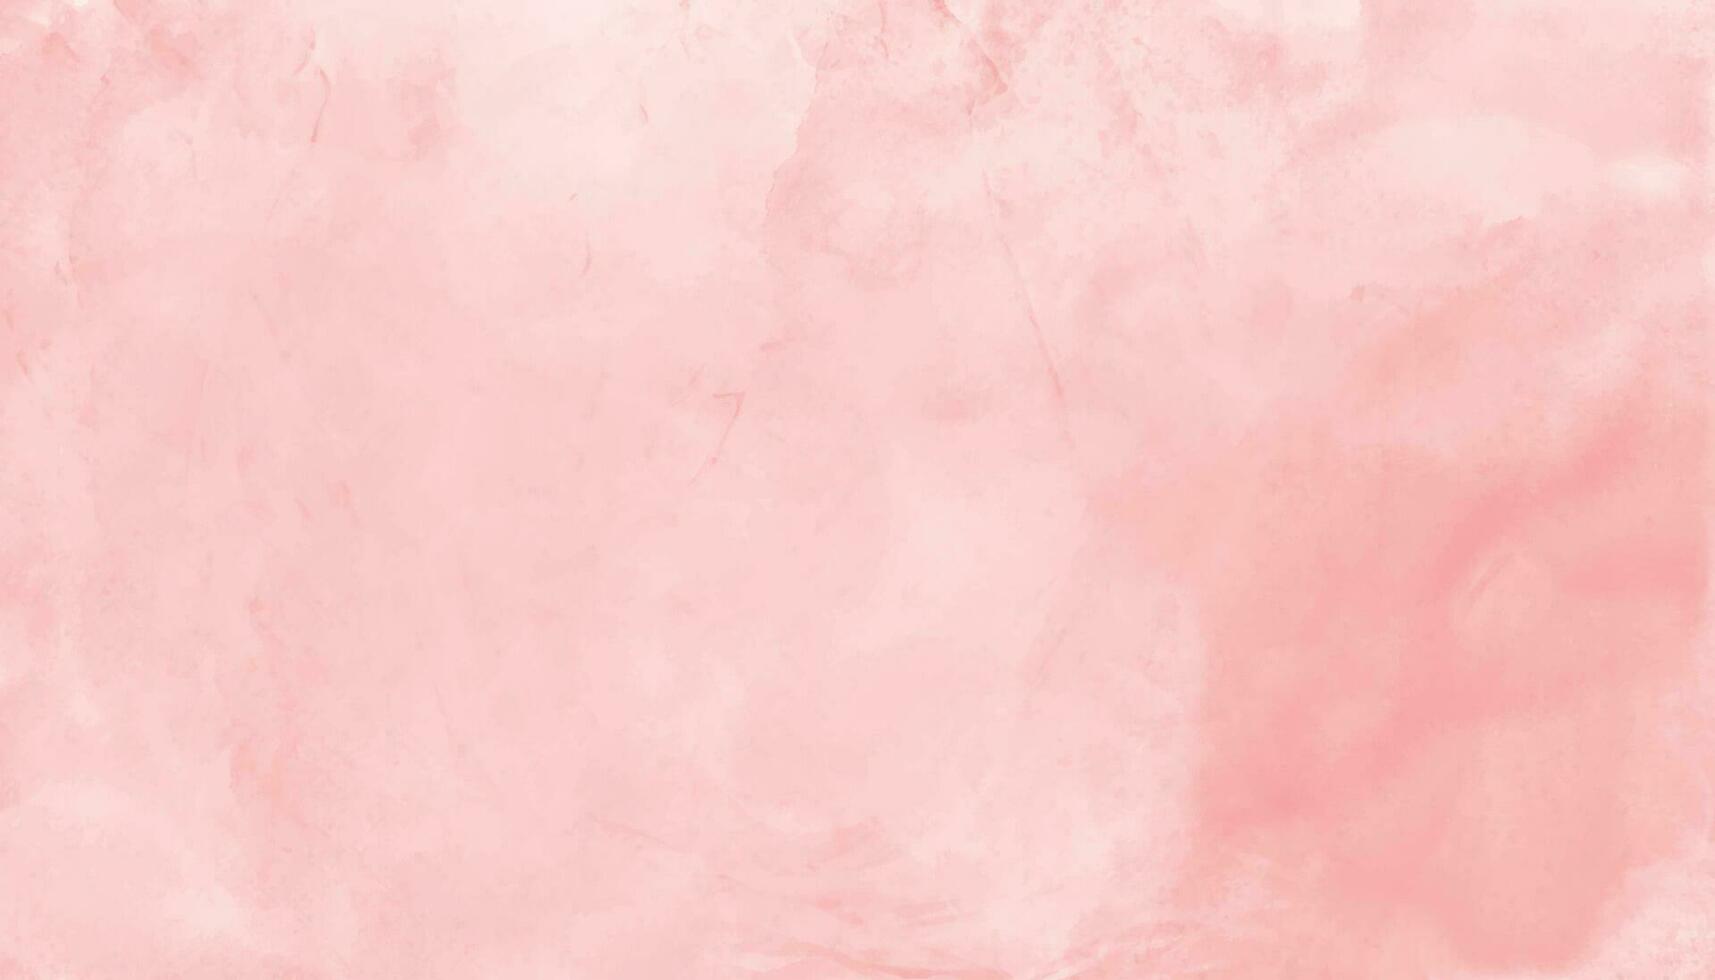 Sanft Rosa Aquarell Hintergrund. Fantasie glatt Licht Rosa Aquarell texturiert vektor